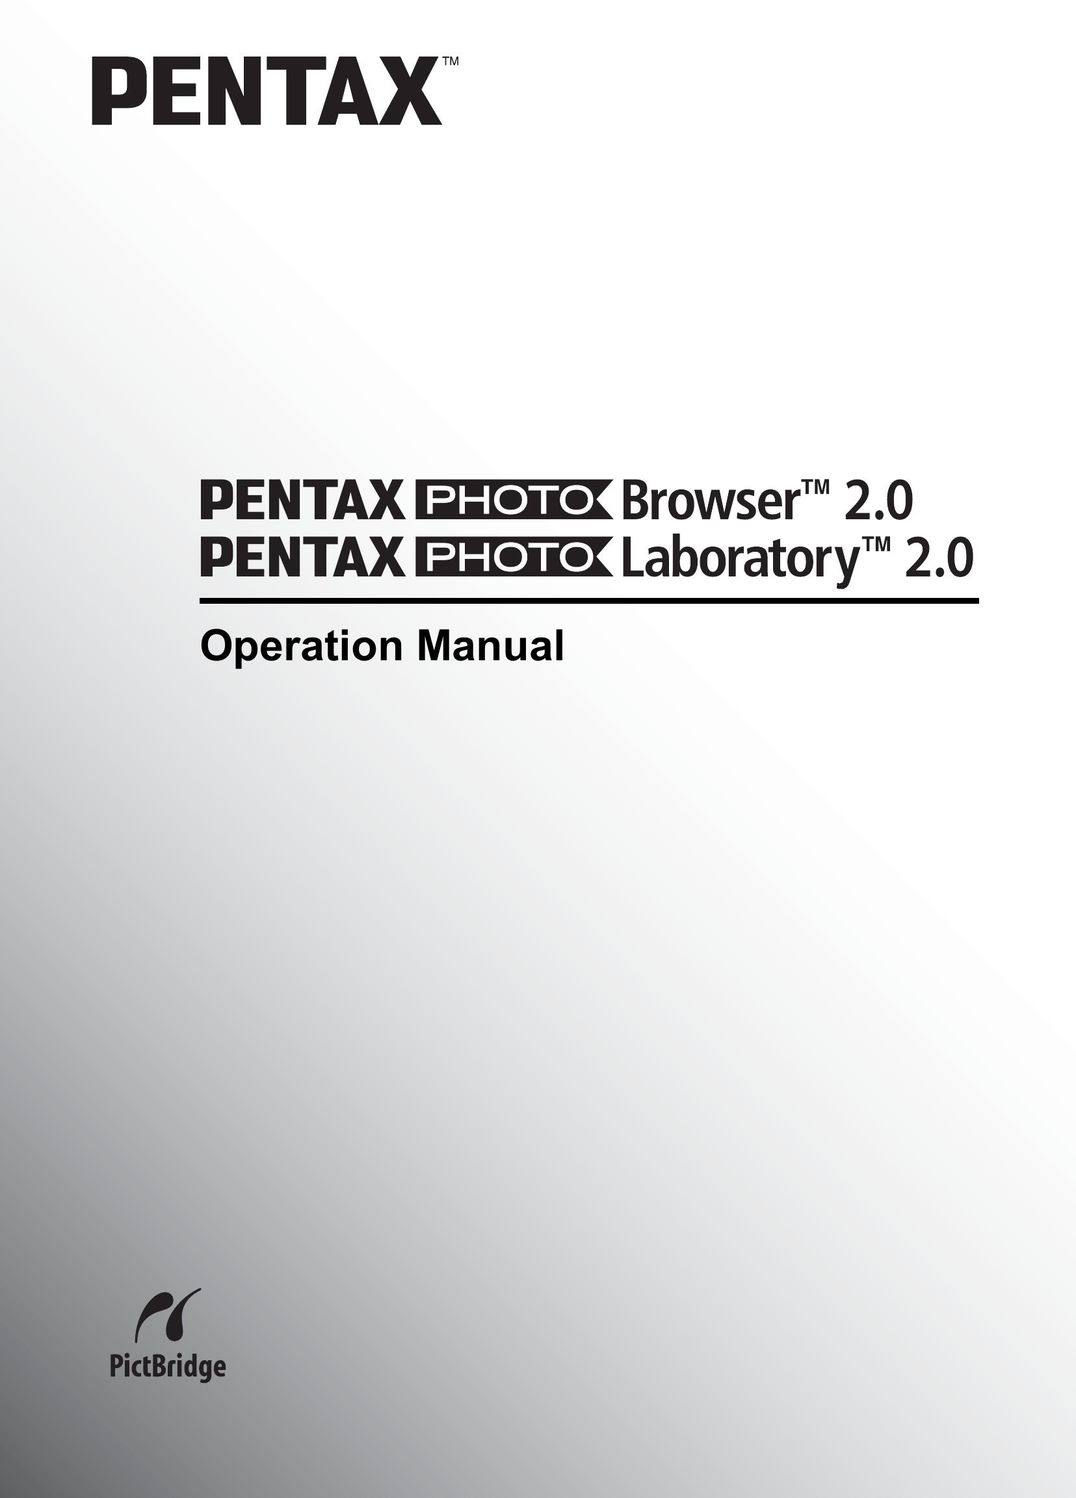 Pentax Laboratory 2.0 Network Card User Manual